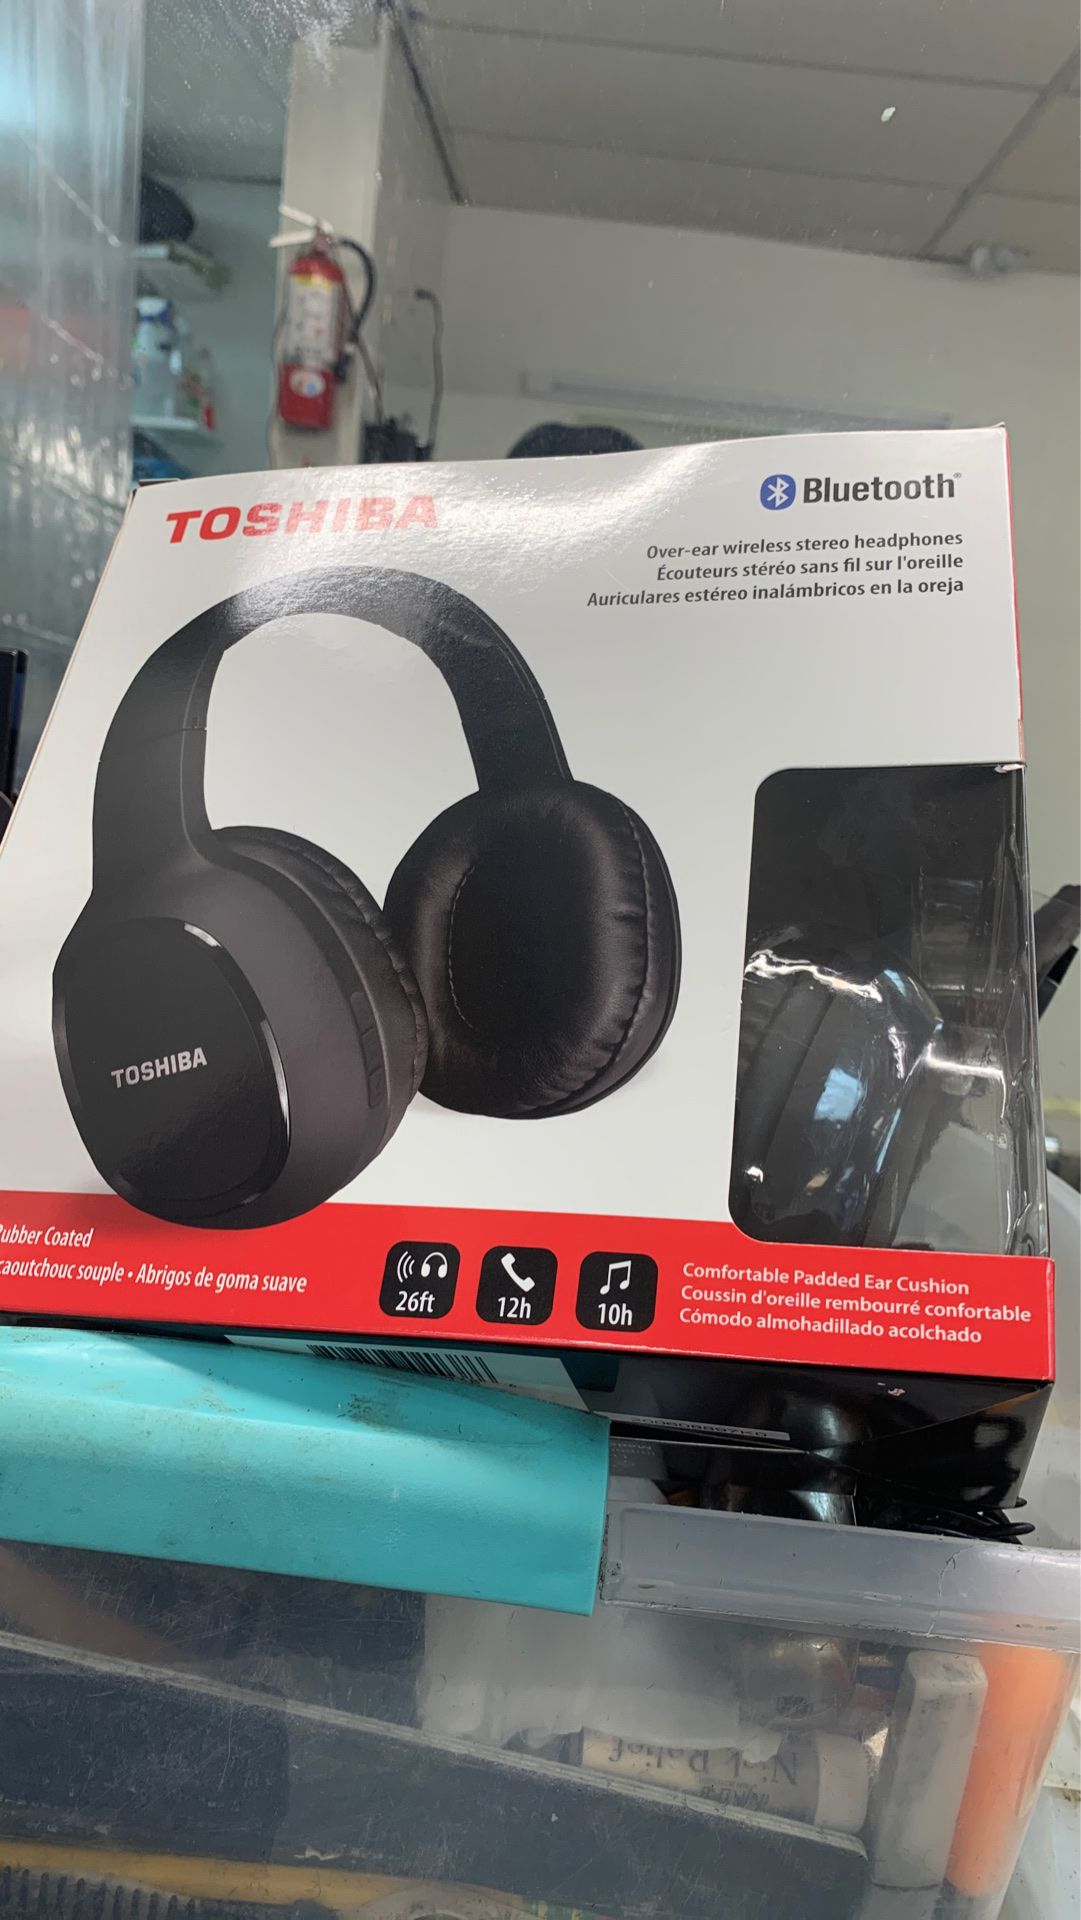 Toshiba Bluetooth headphones